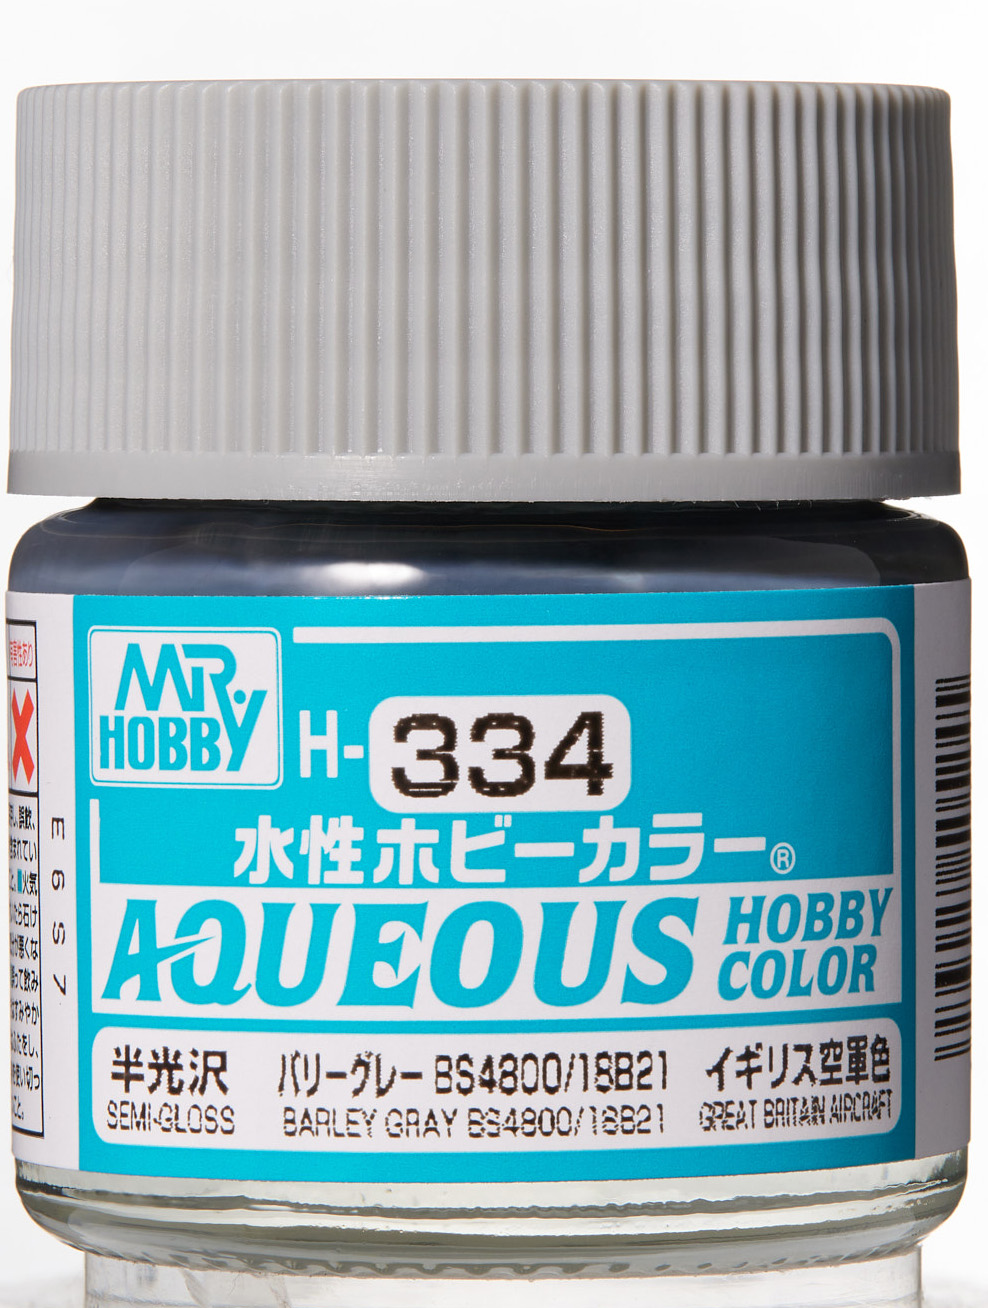 Mr. Aqueous Hobby Color - Barley Grey BS4800/18B21 - H334 - Gerstengrau BS4800/18B21